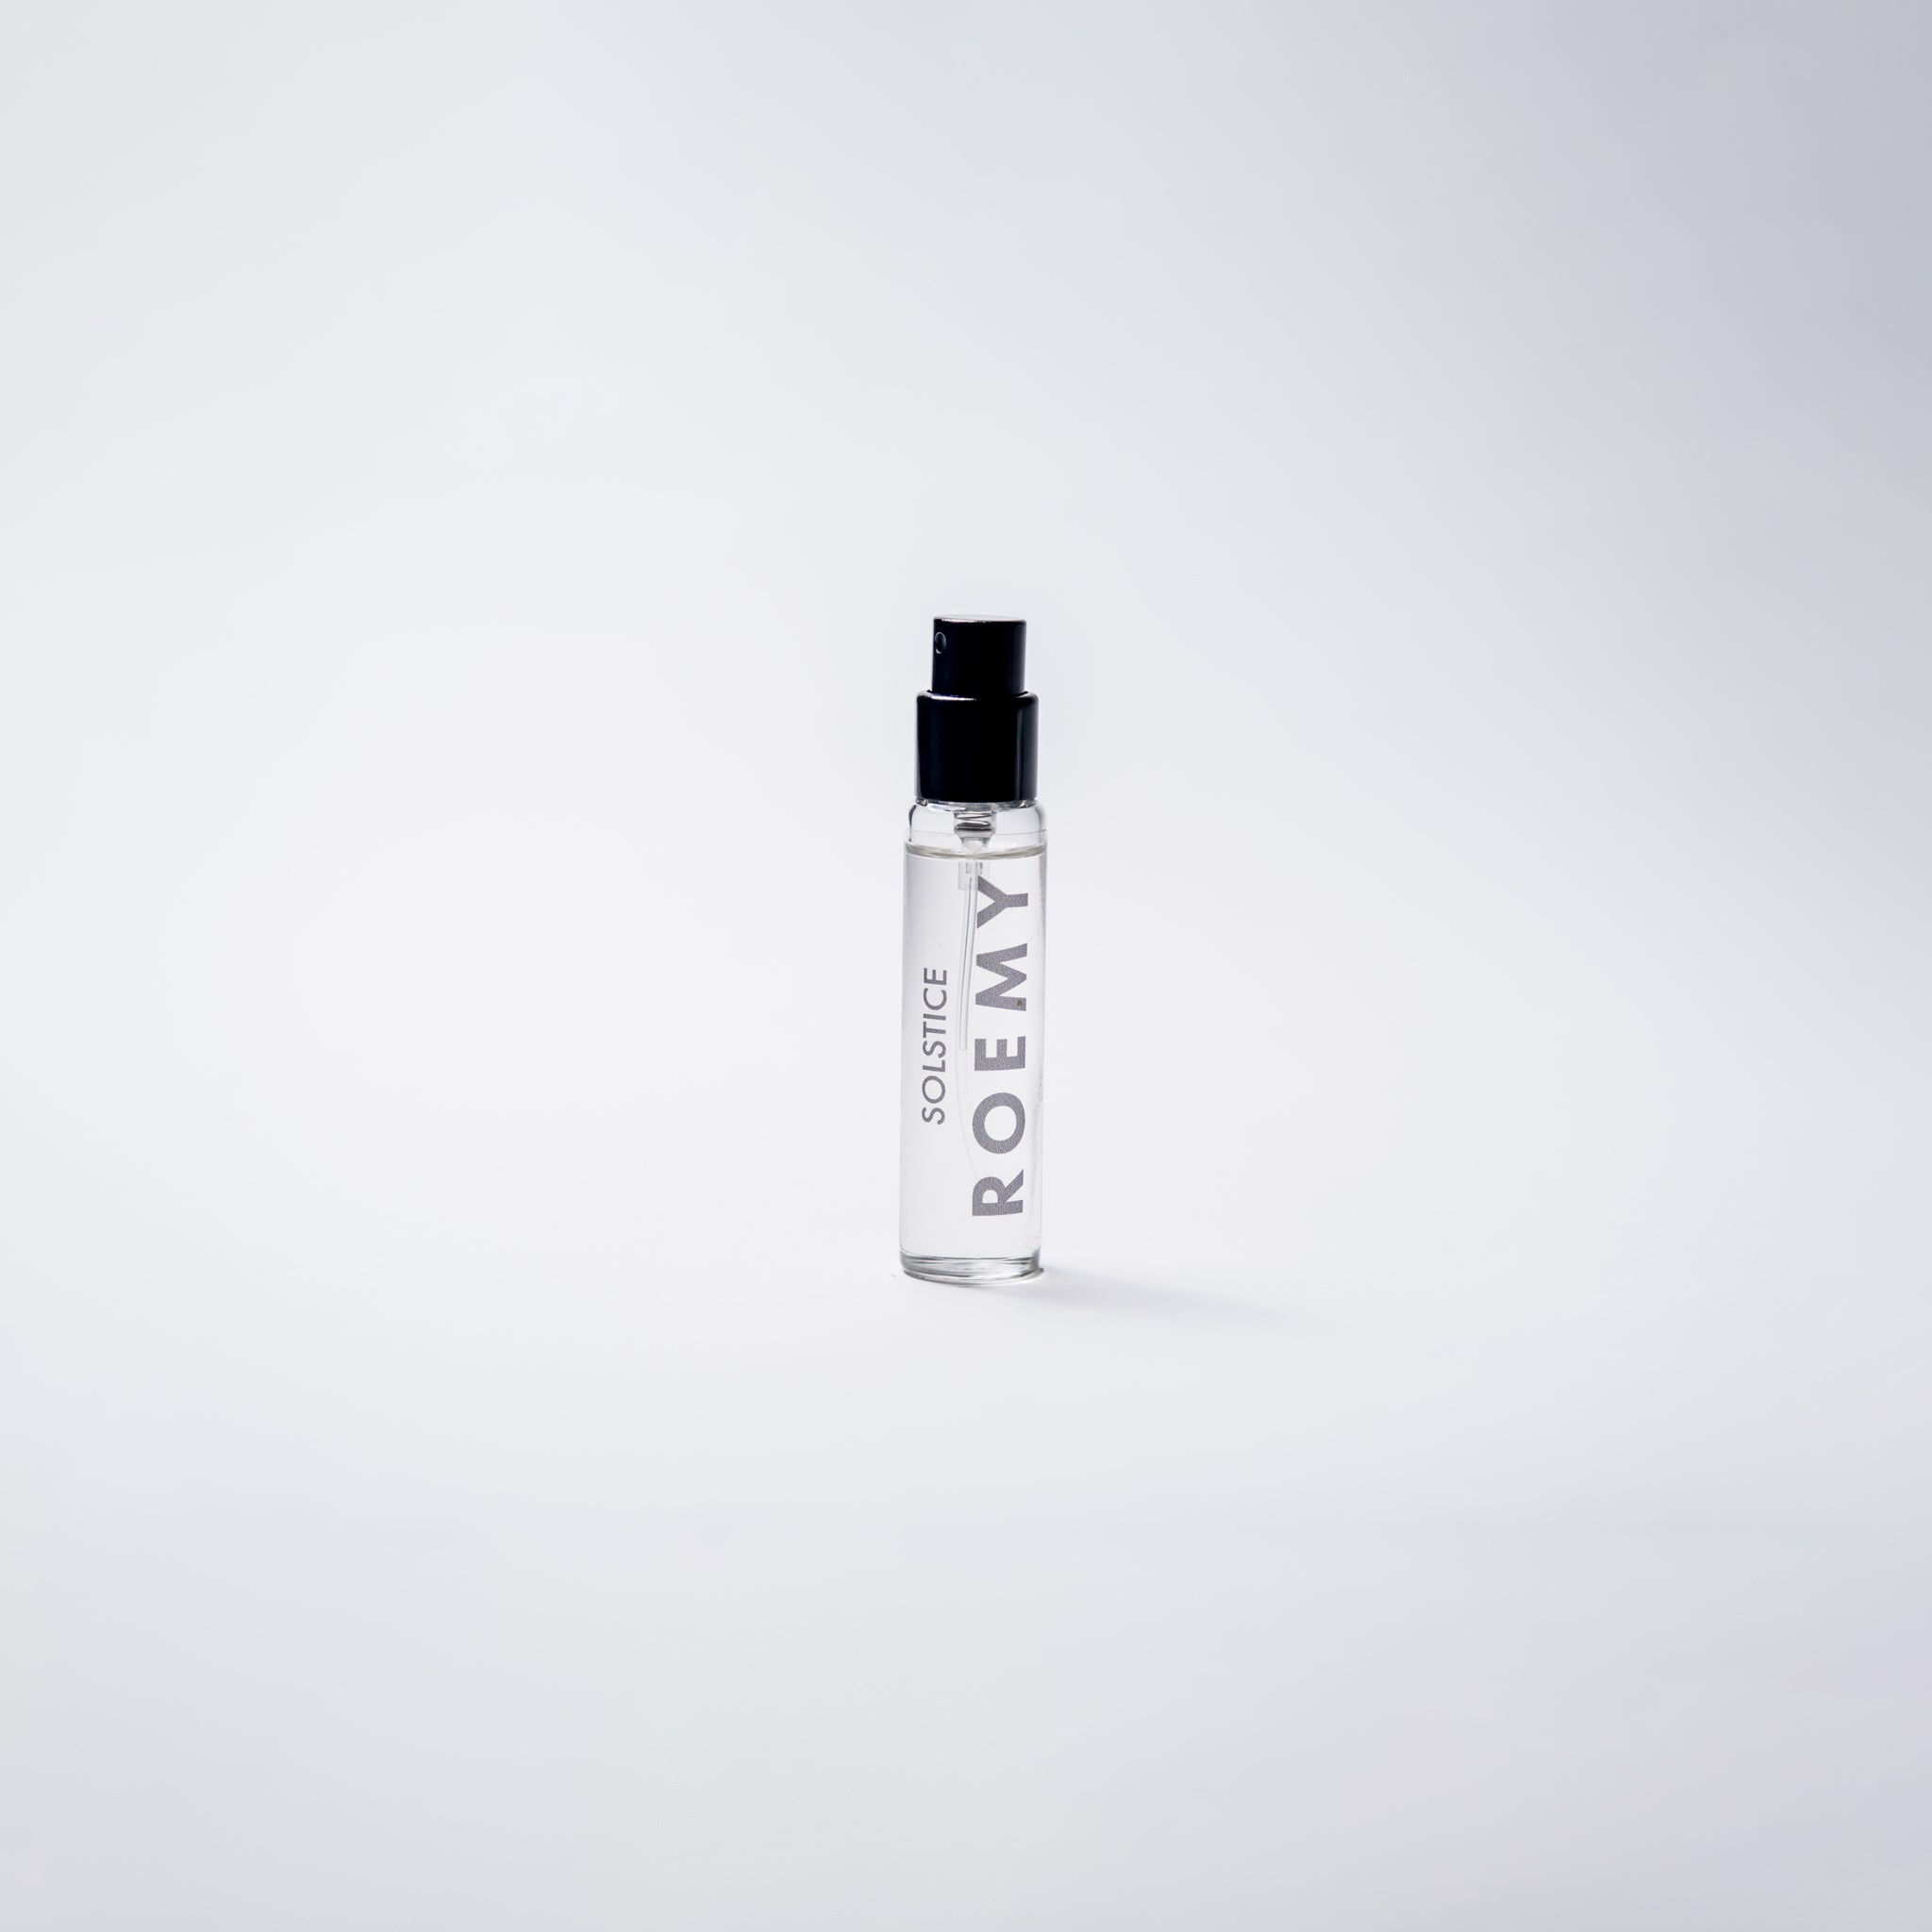 ROEMY Solstice 15mL Traveller Parfum - front